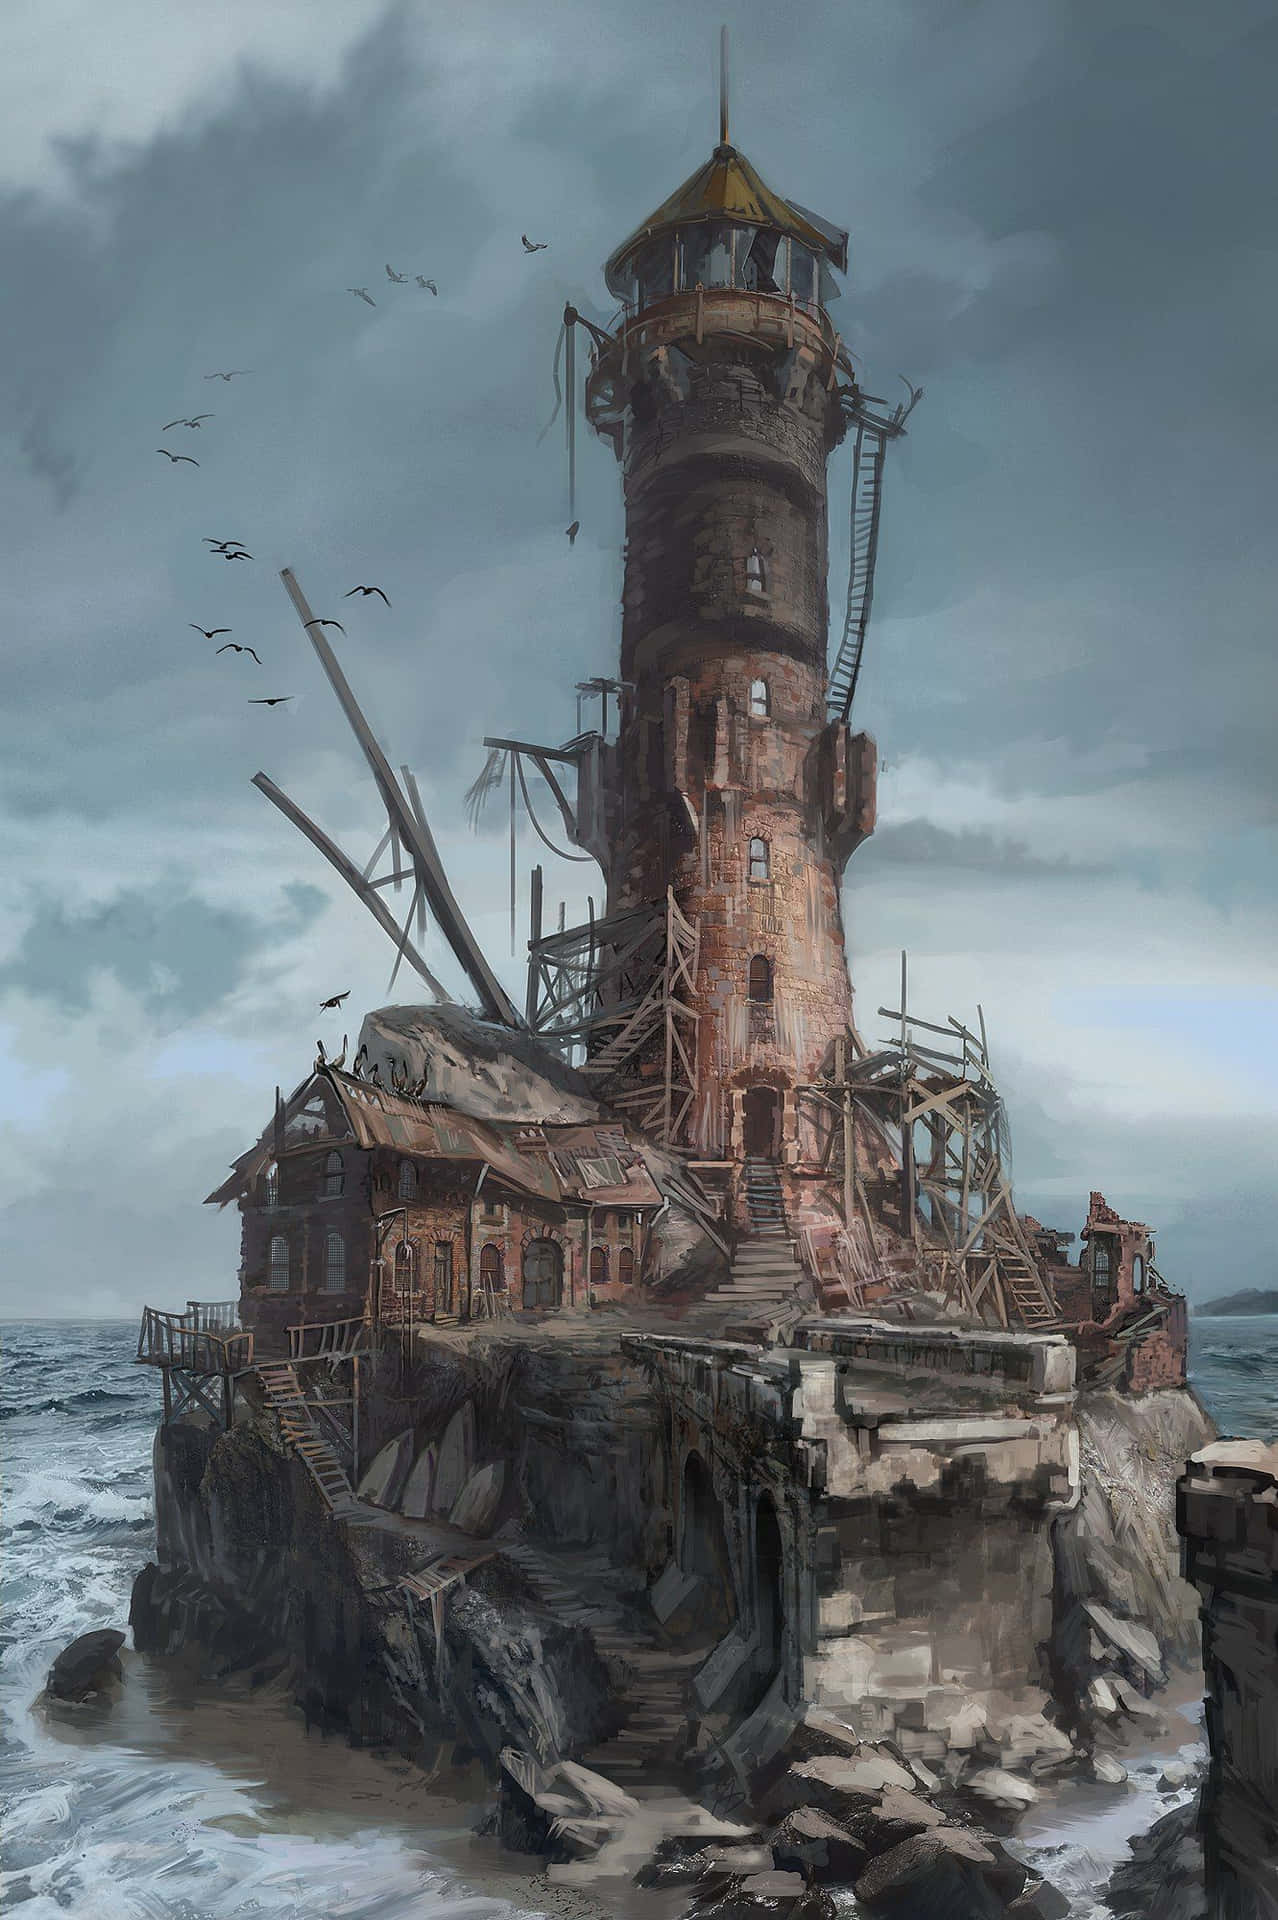 A Lighthouse On A Rocky Island In The Ocean